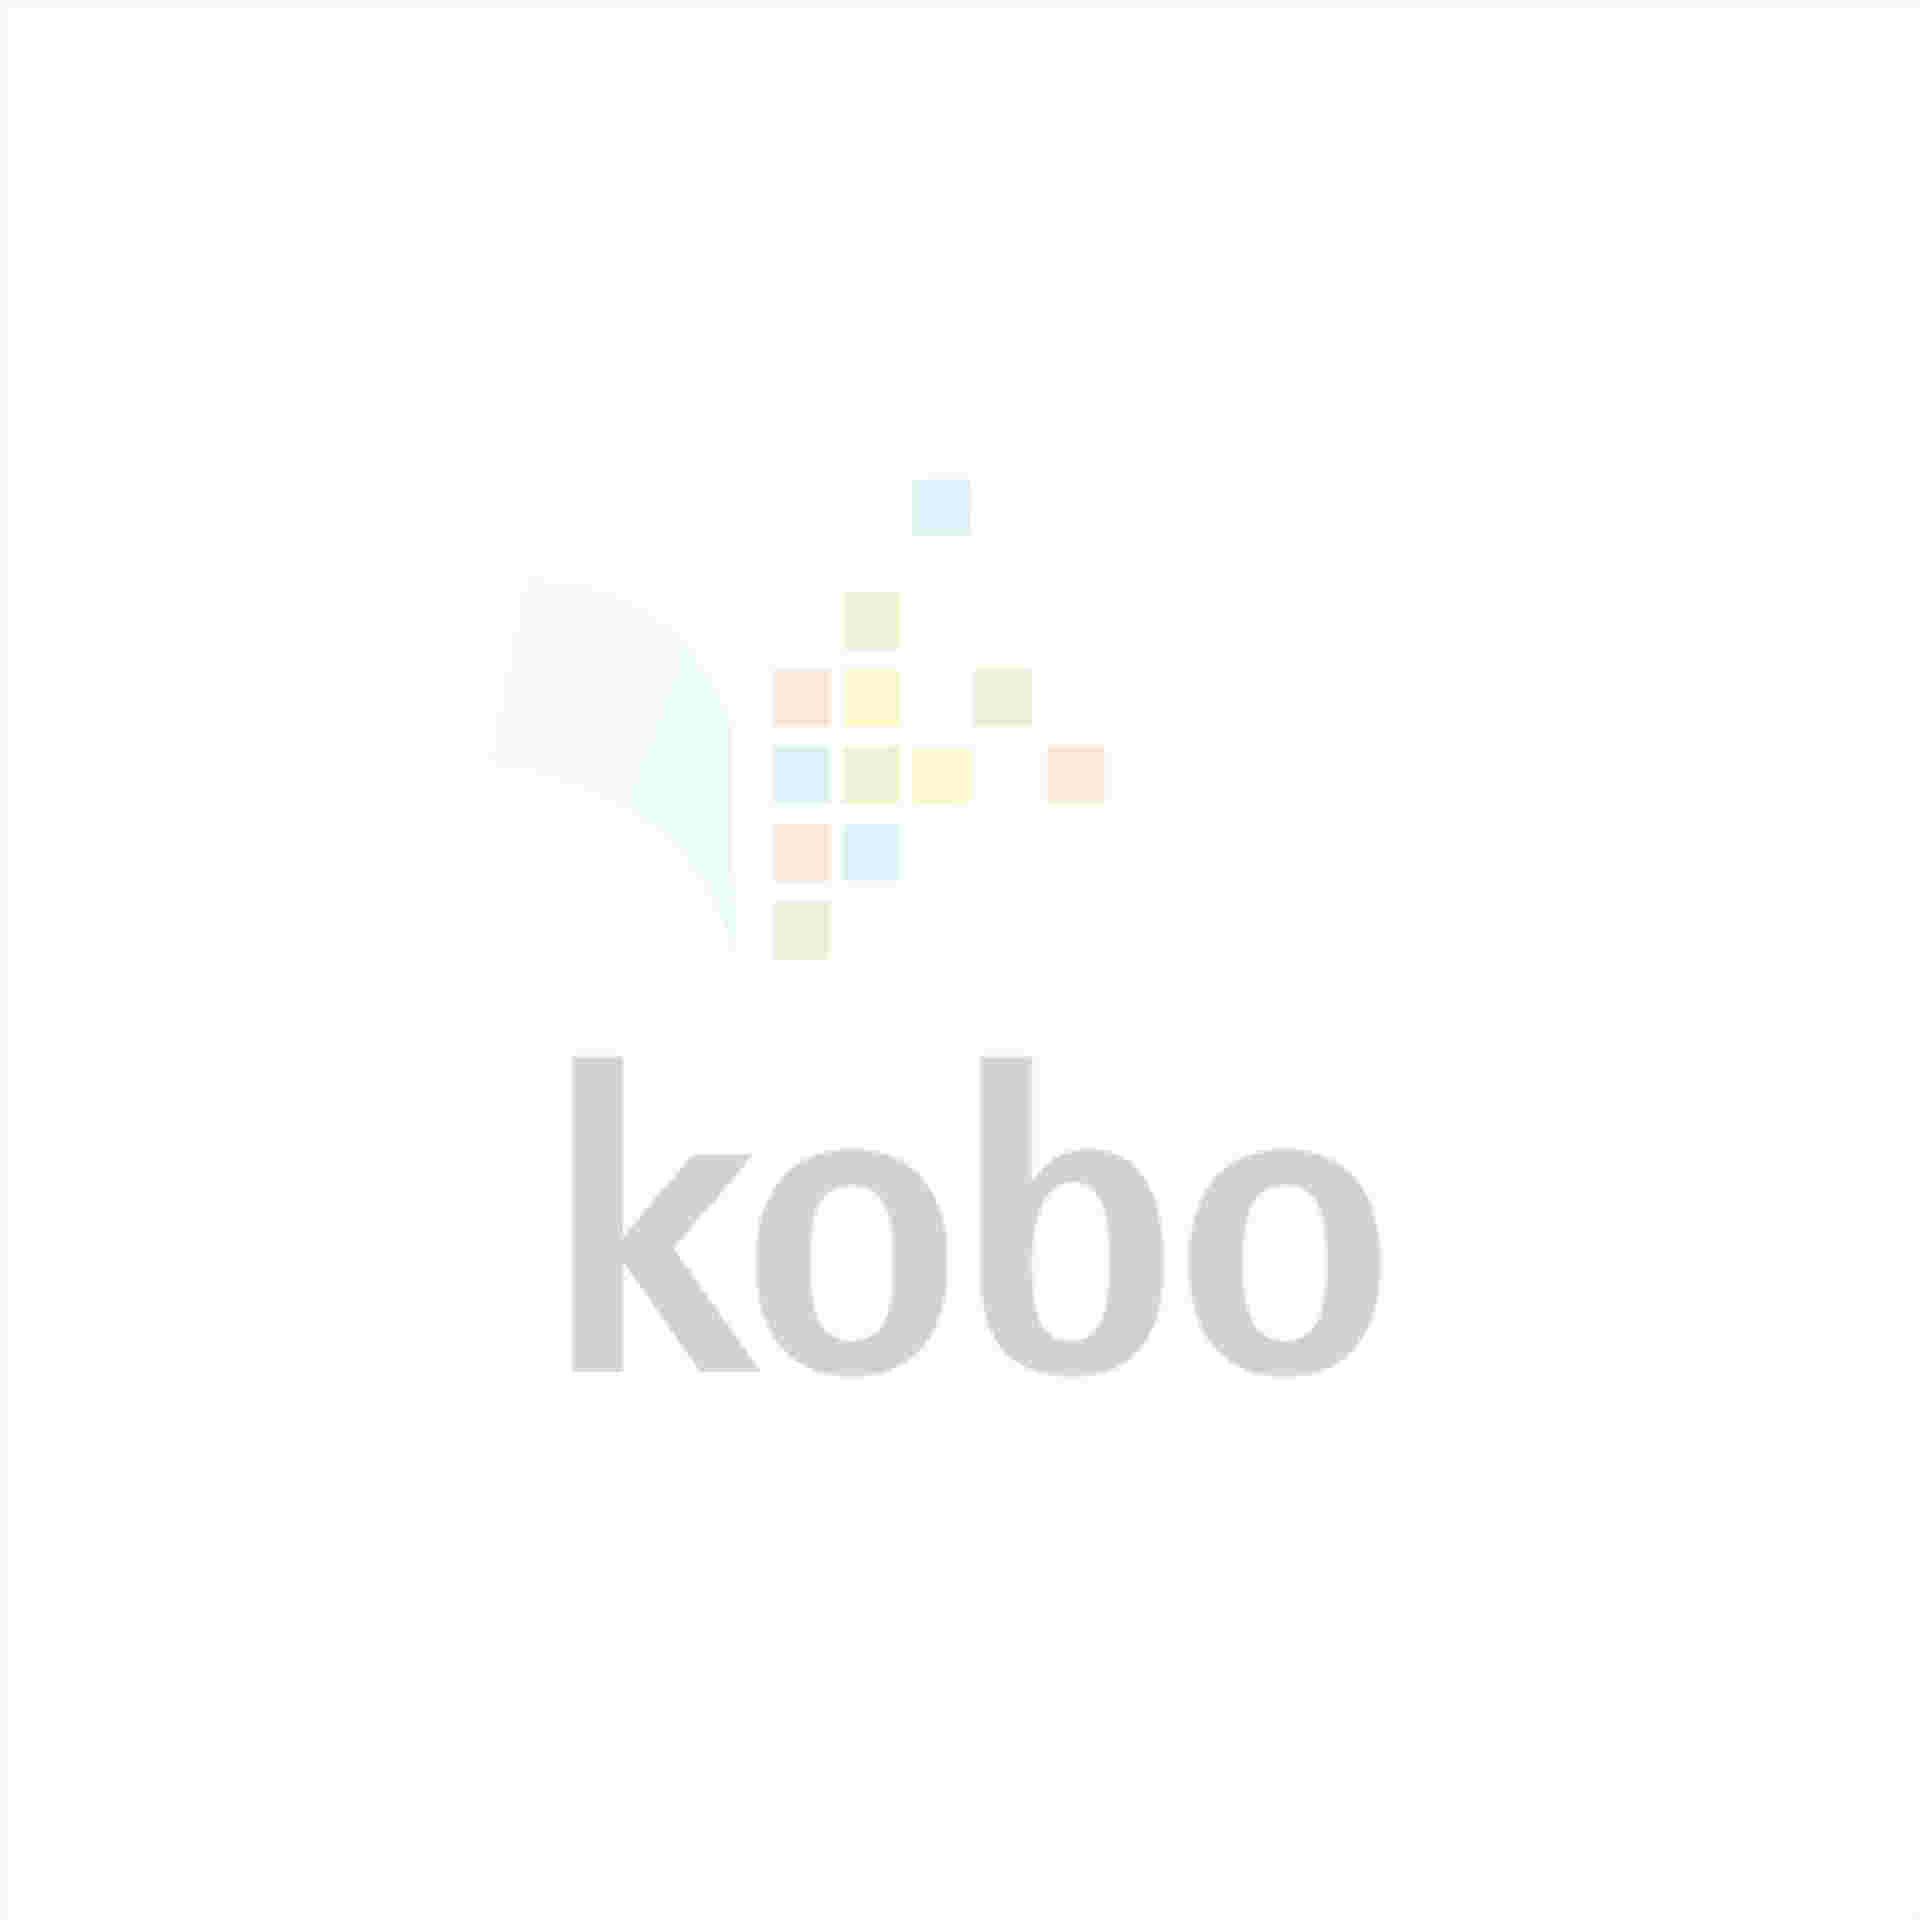 Kobo - feature_kobo_namingidentity_logoconcept1_3col